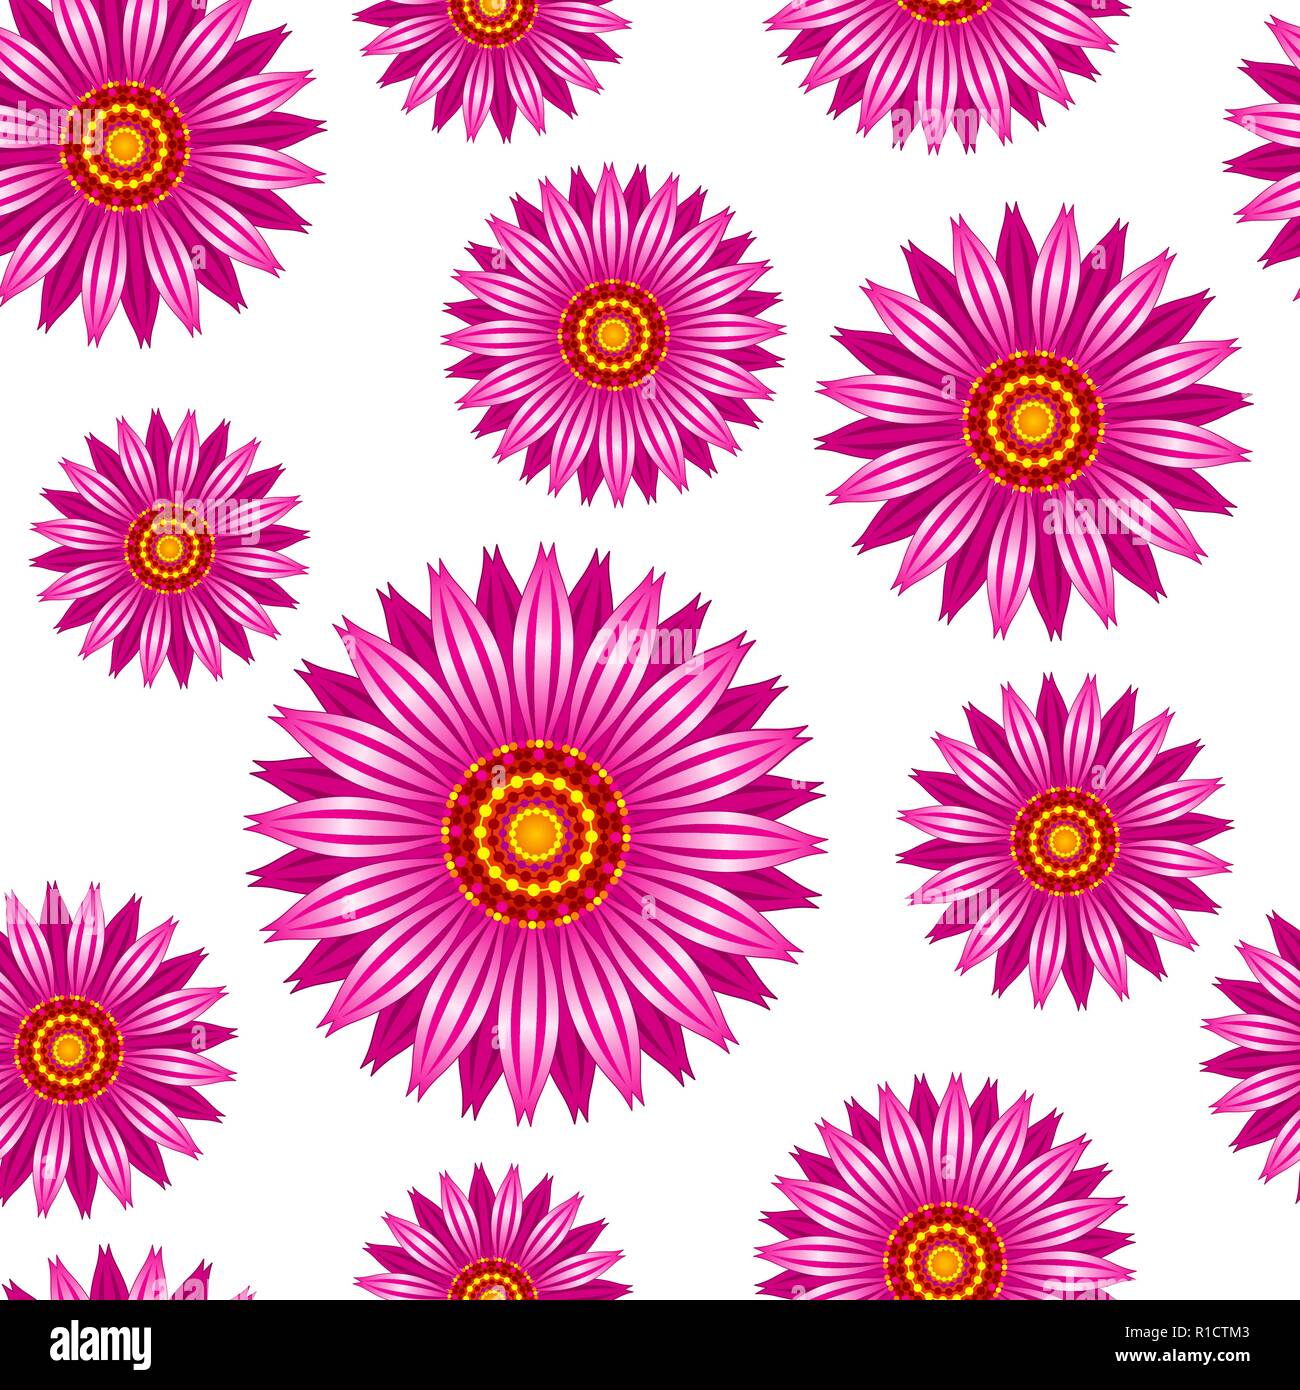 Echinacea purpurea flowers vector seamless pattern. Stock Vector